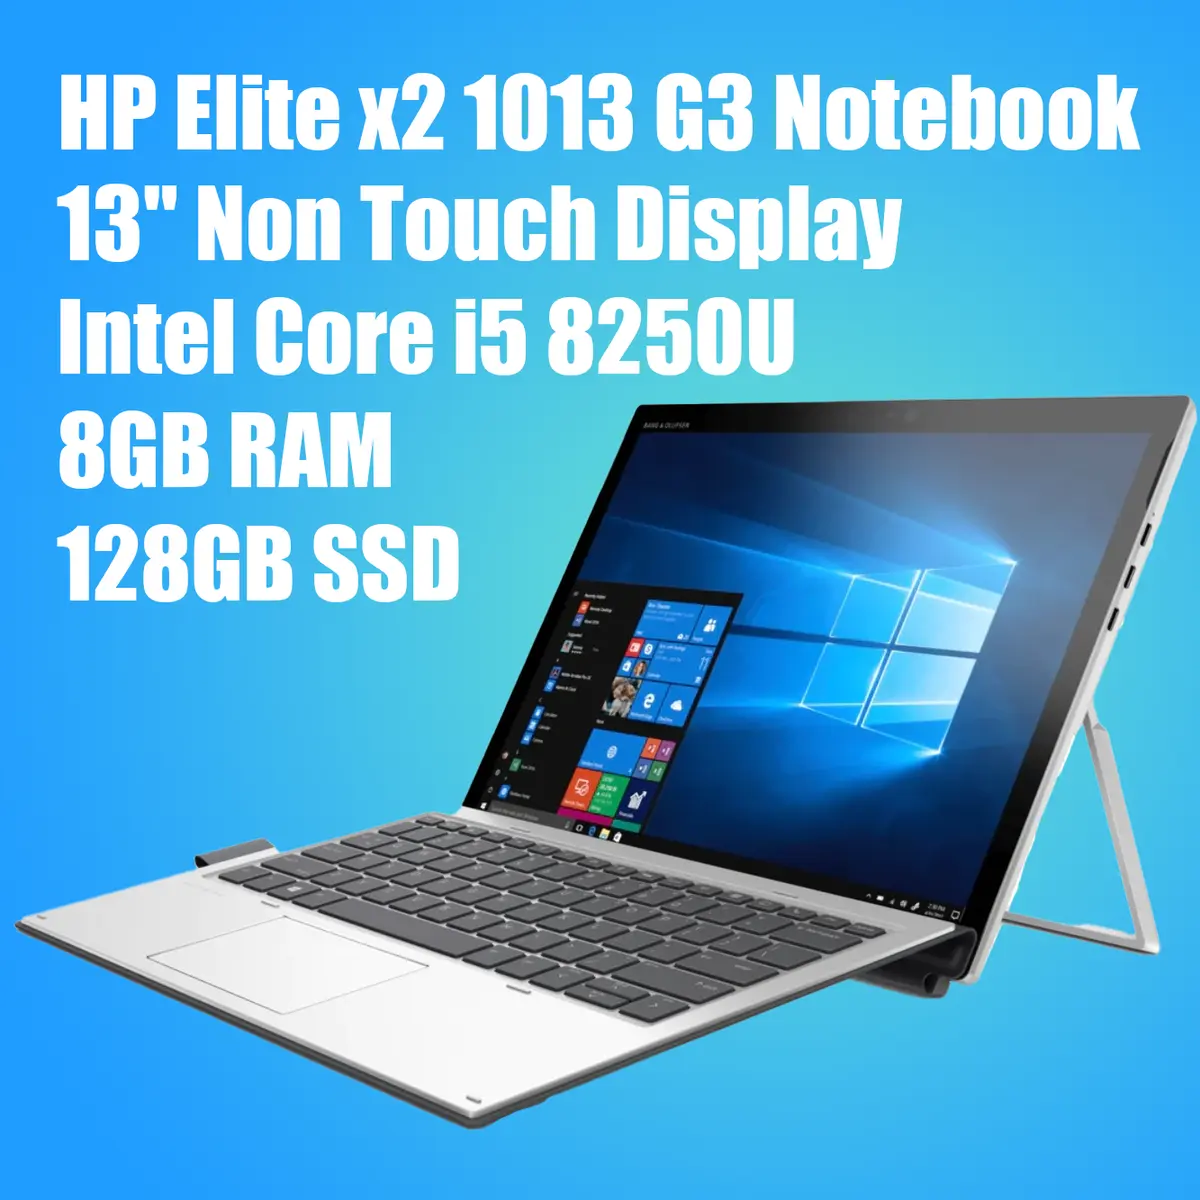 HP Elite x2 1013 G3 Notebook Intel Core i5 8250U 8GB RAM 128GB SSD